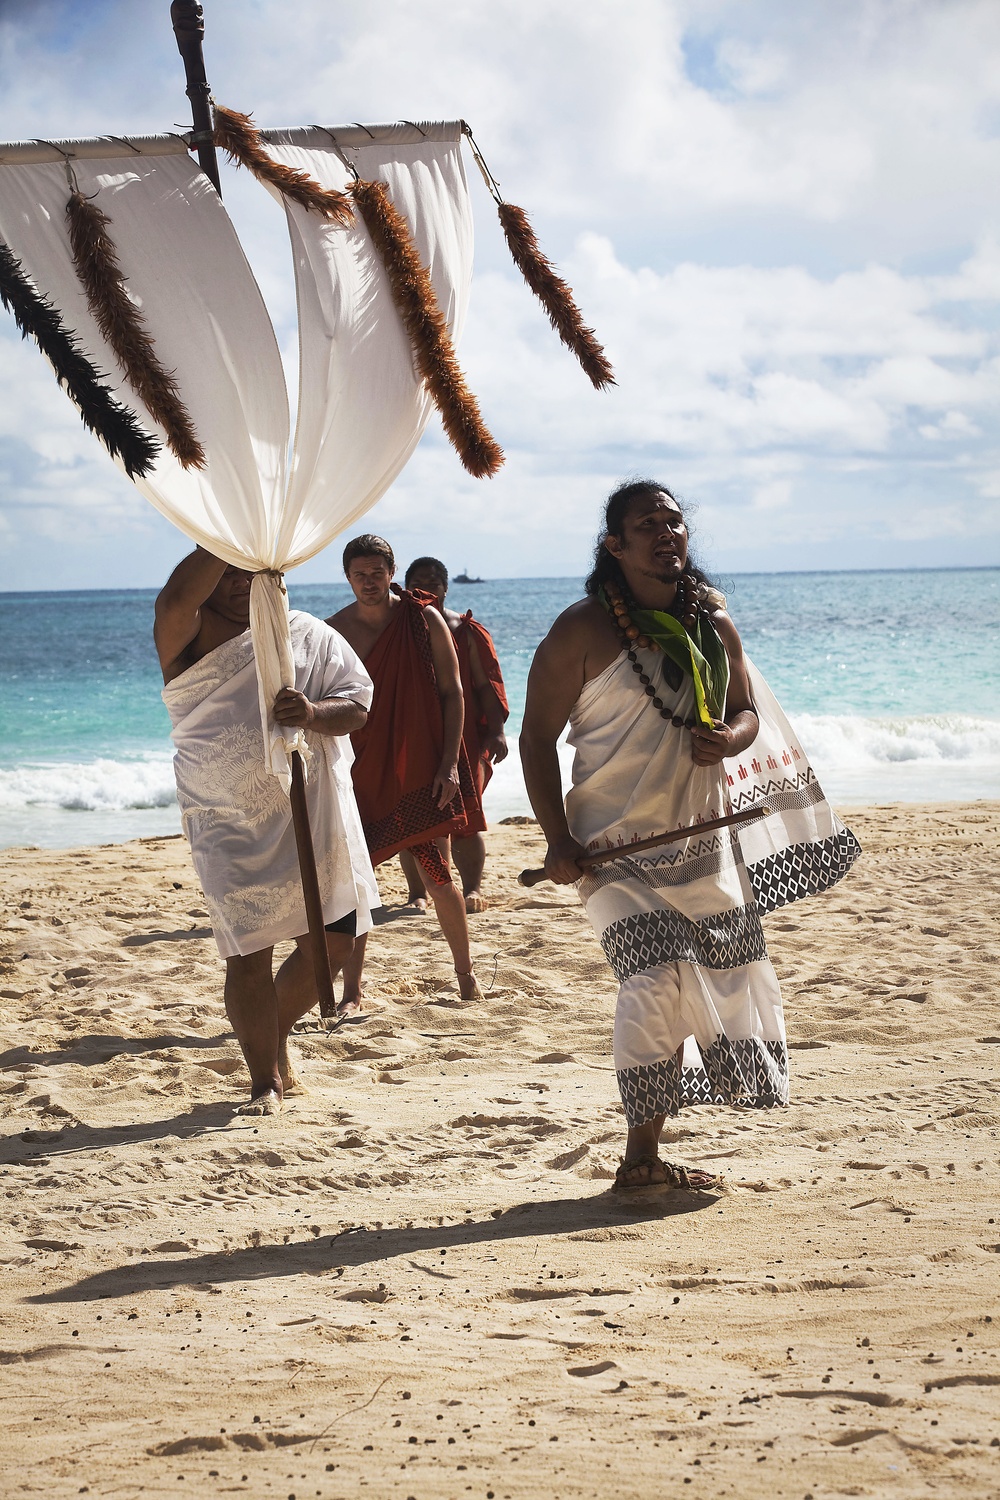 Waimanalo Makahiki festival celebrates island heritage, change in seasons